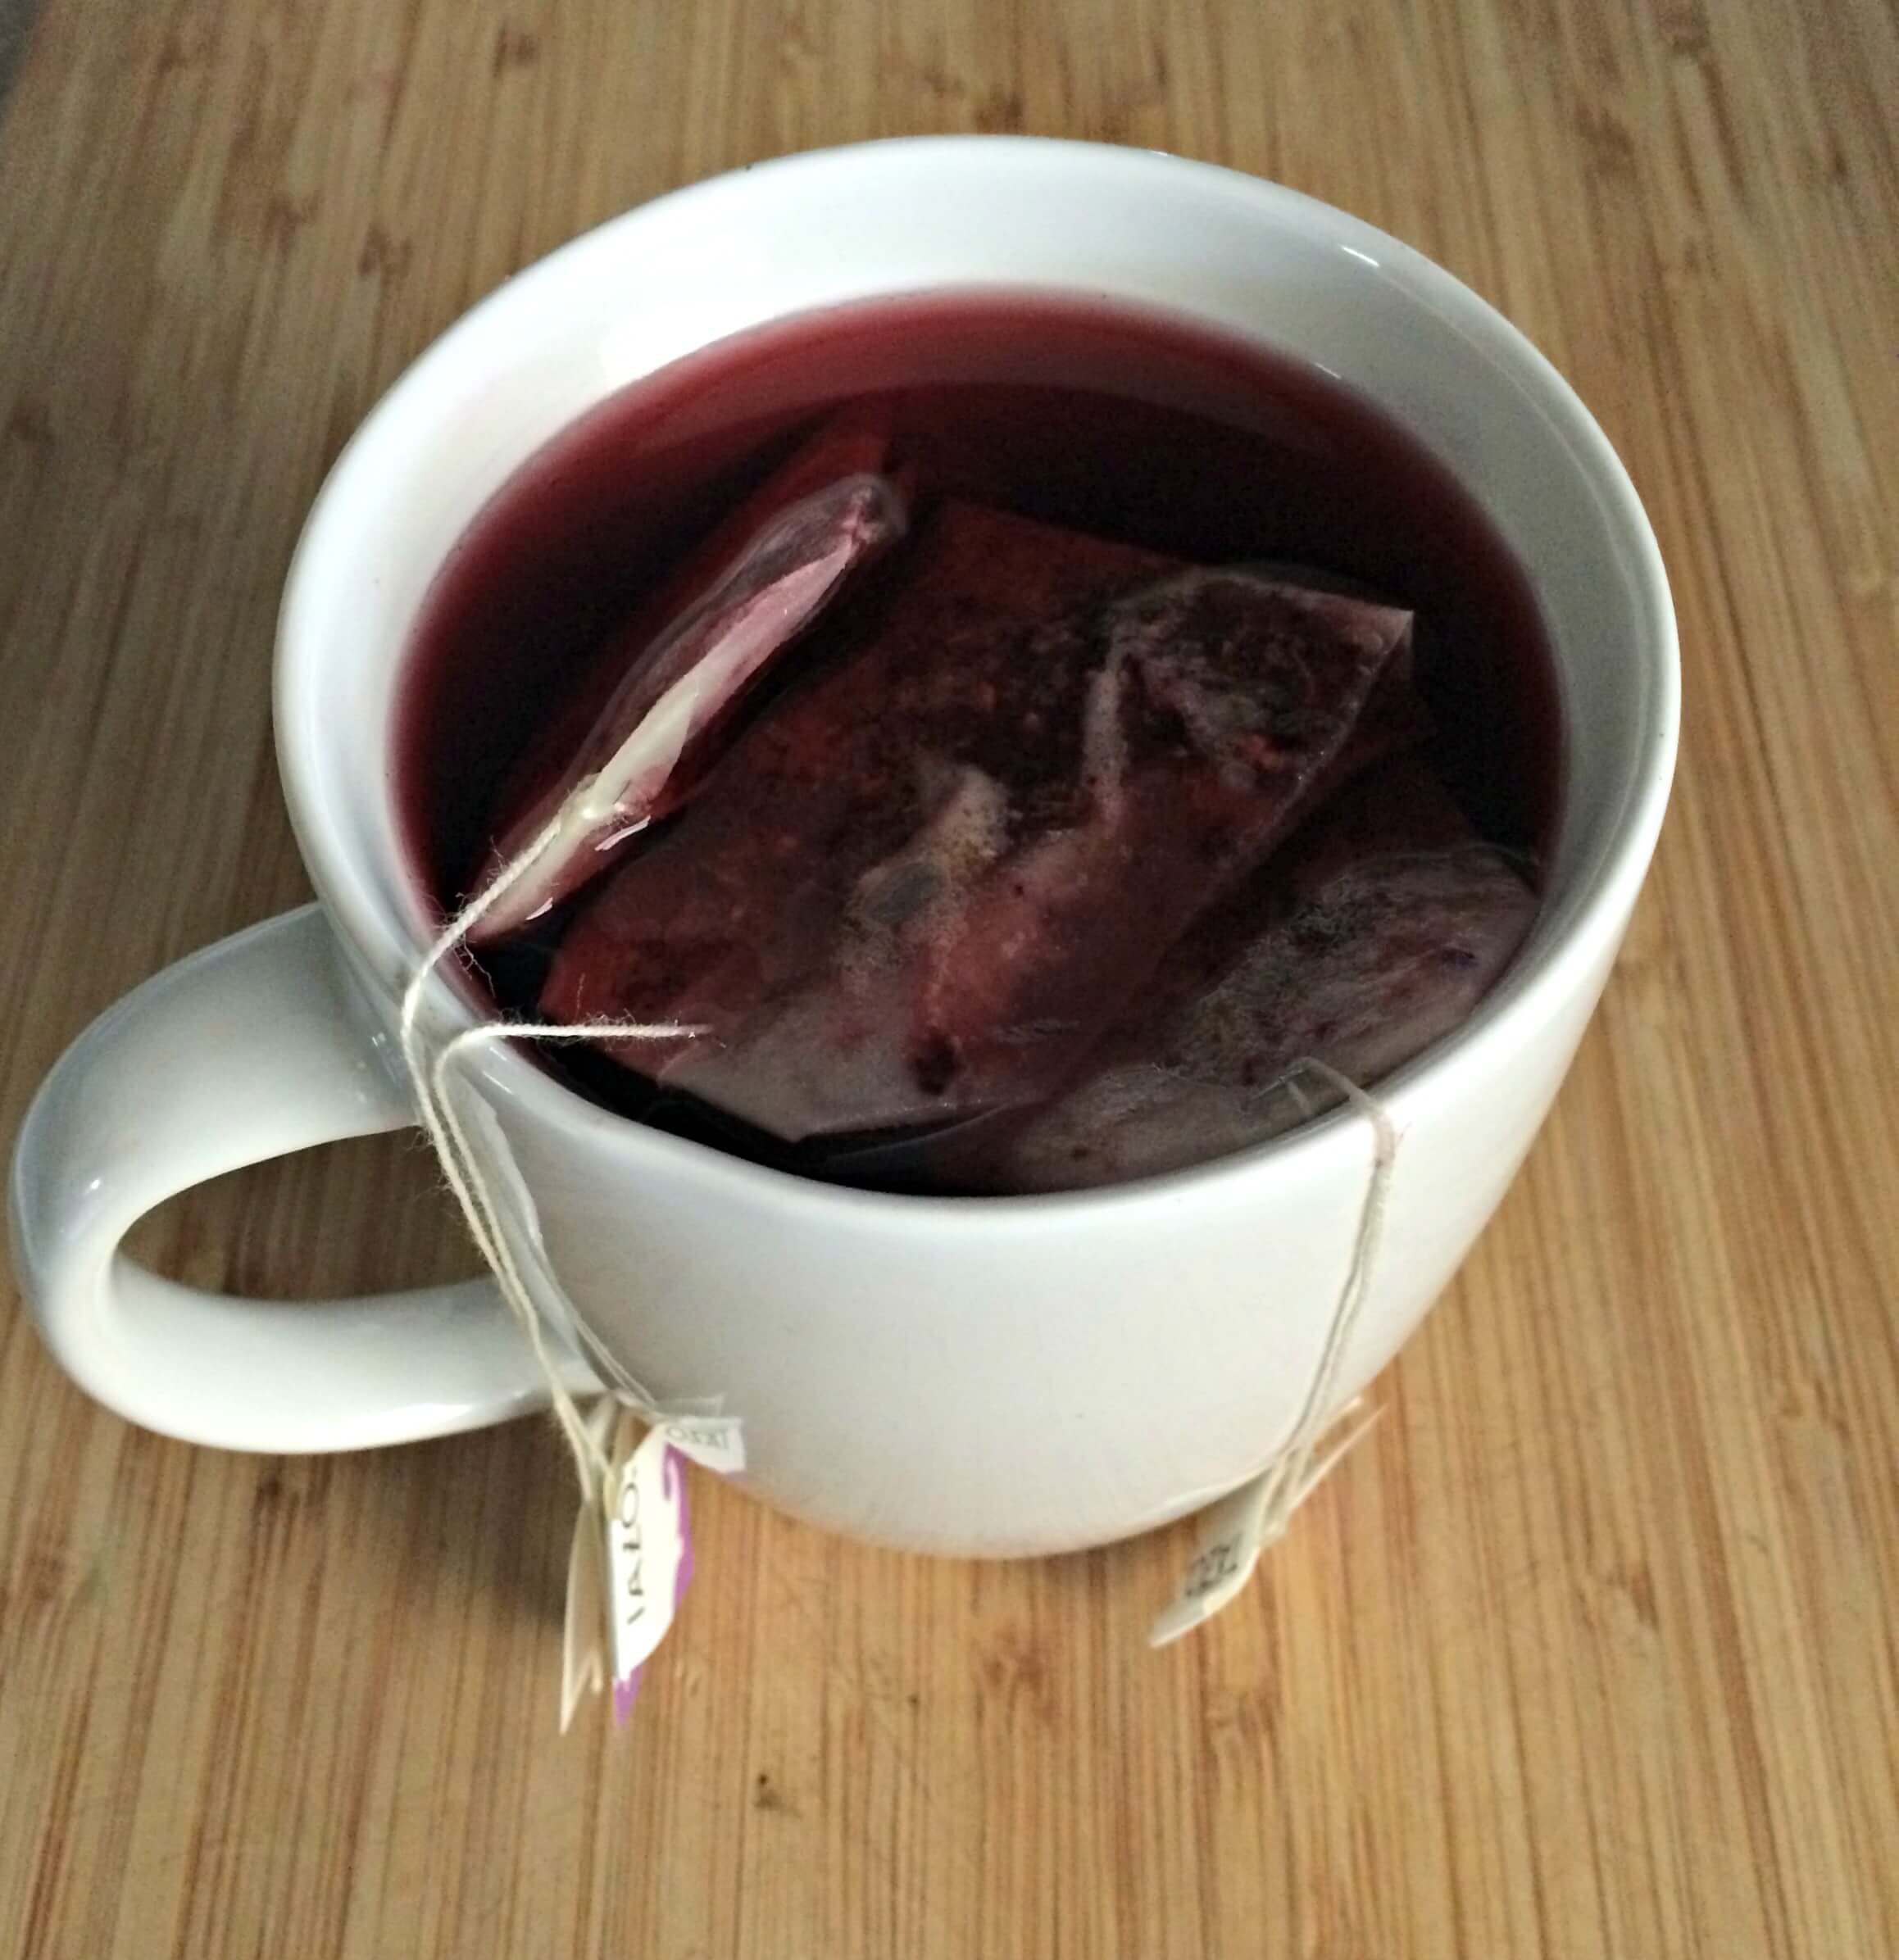 Sparkling Iced Tea and Lemonade - steep tea triple strength